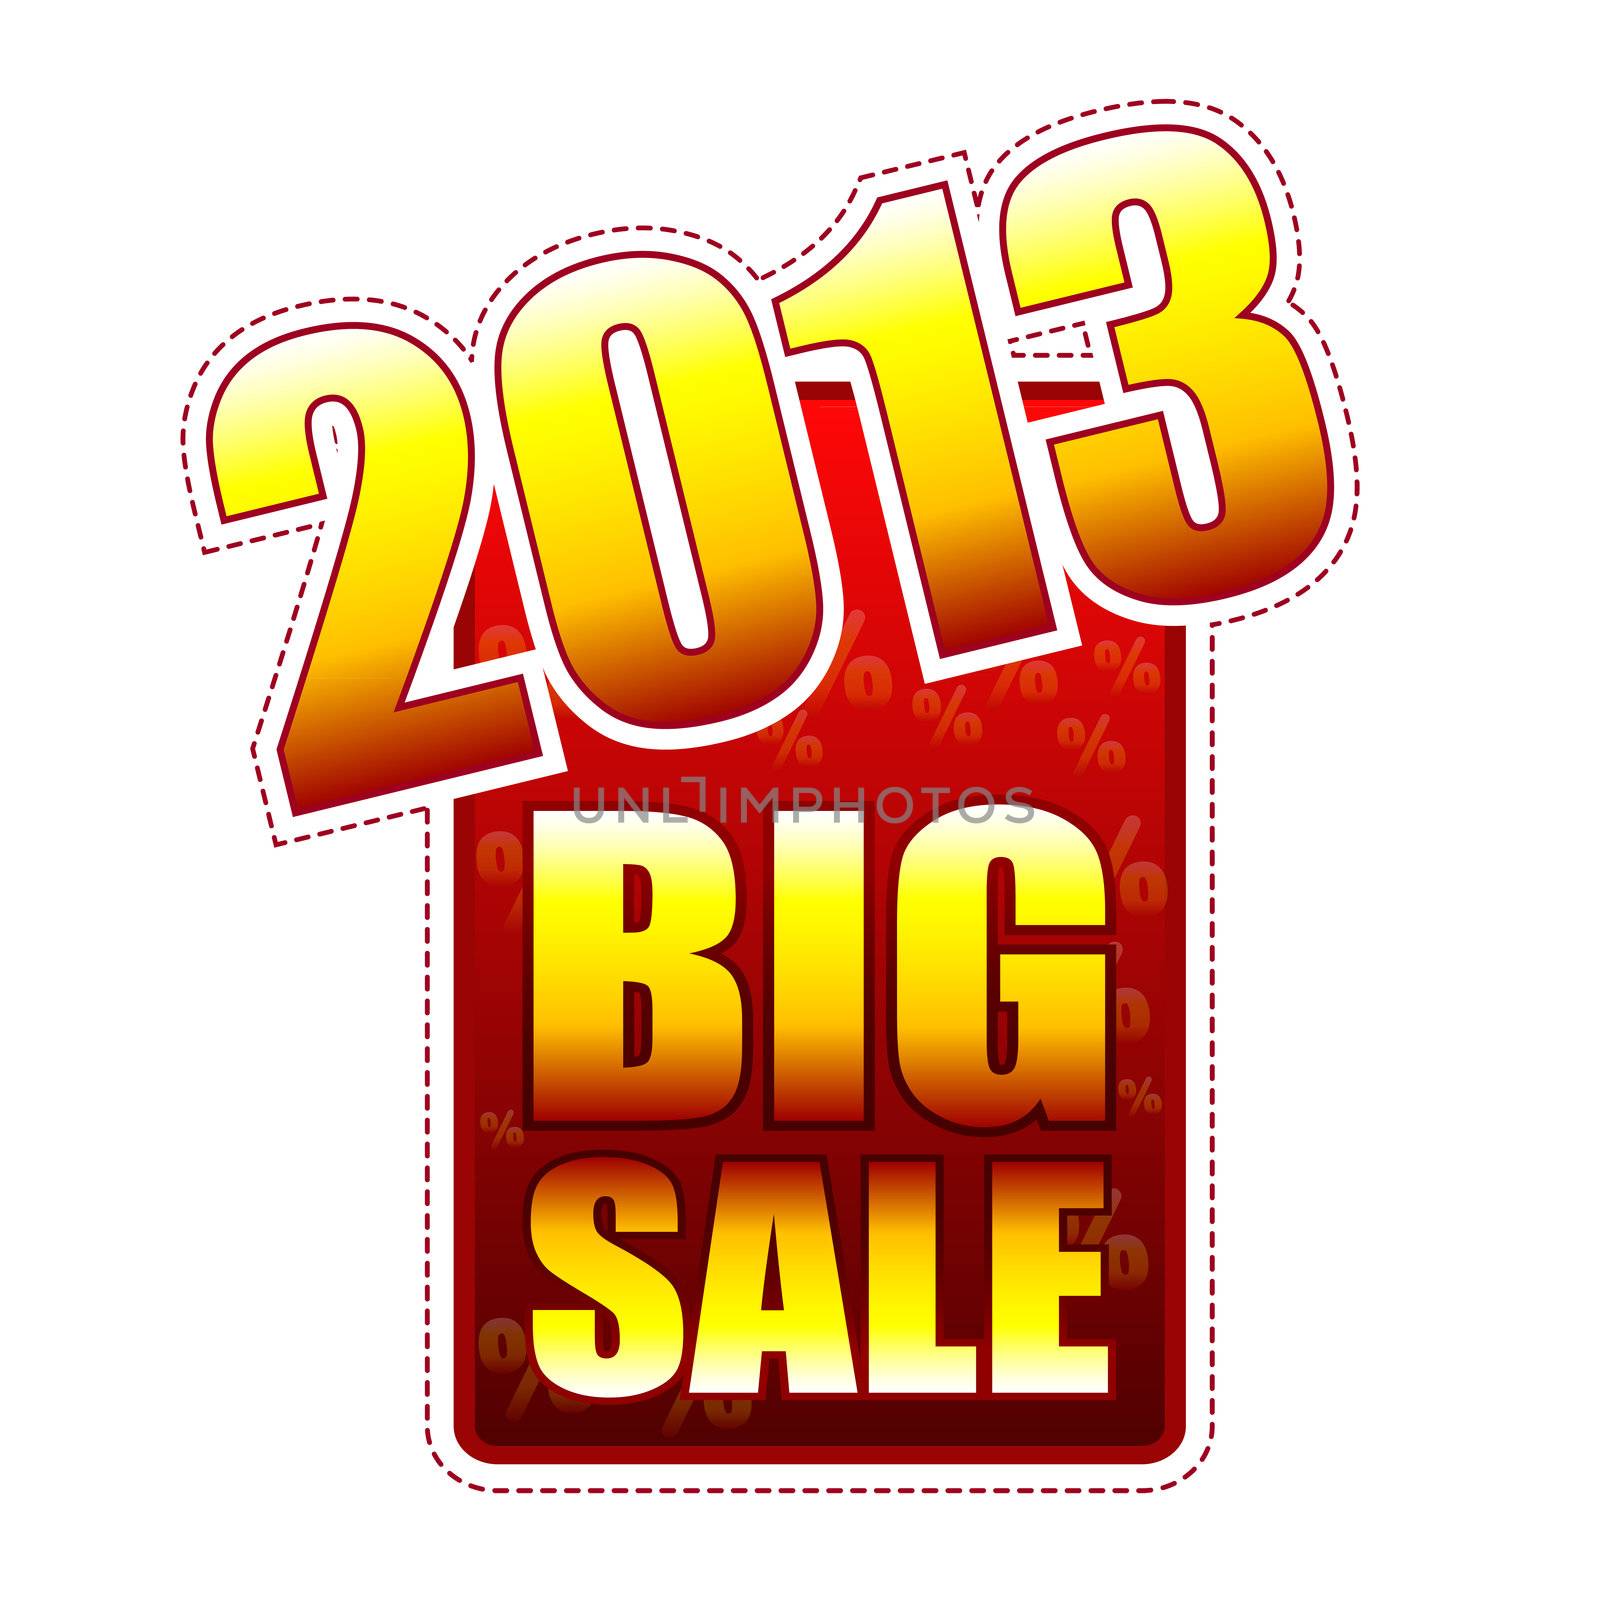 big sale year 2013 label by marinini